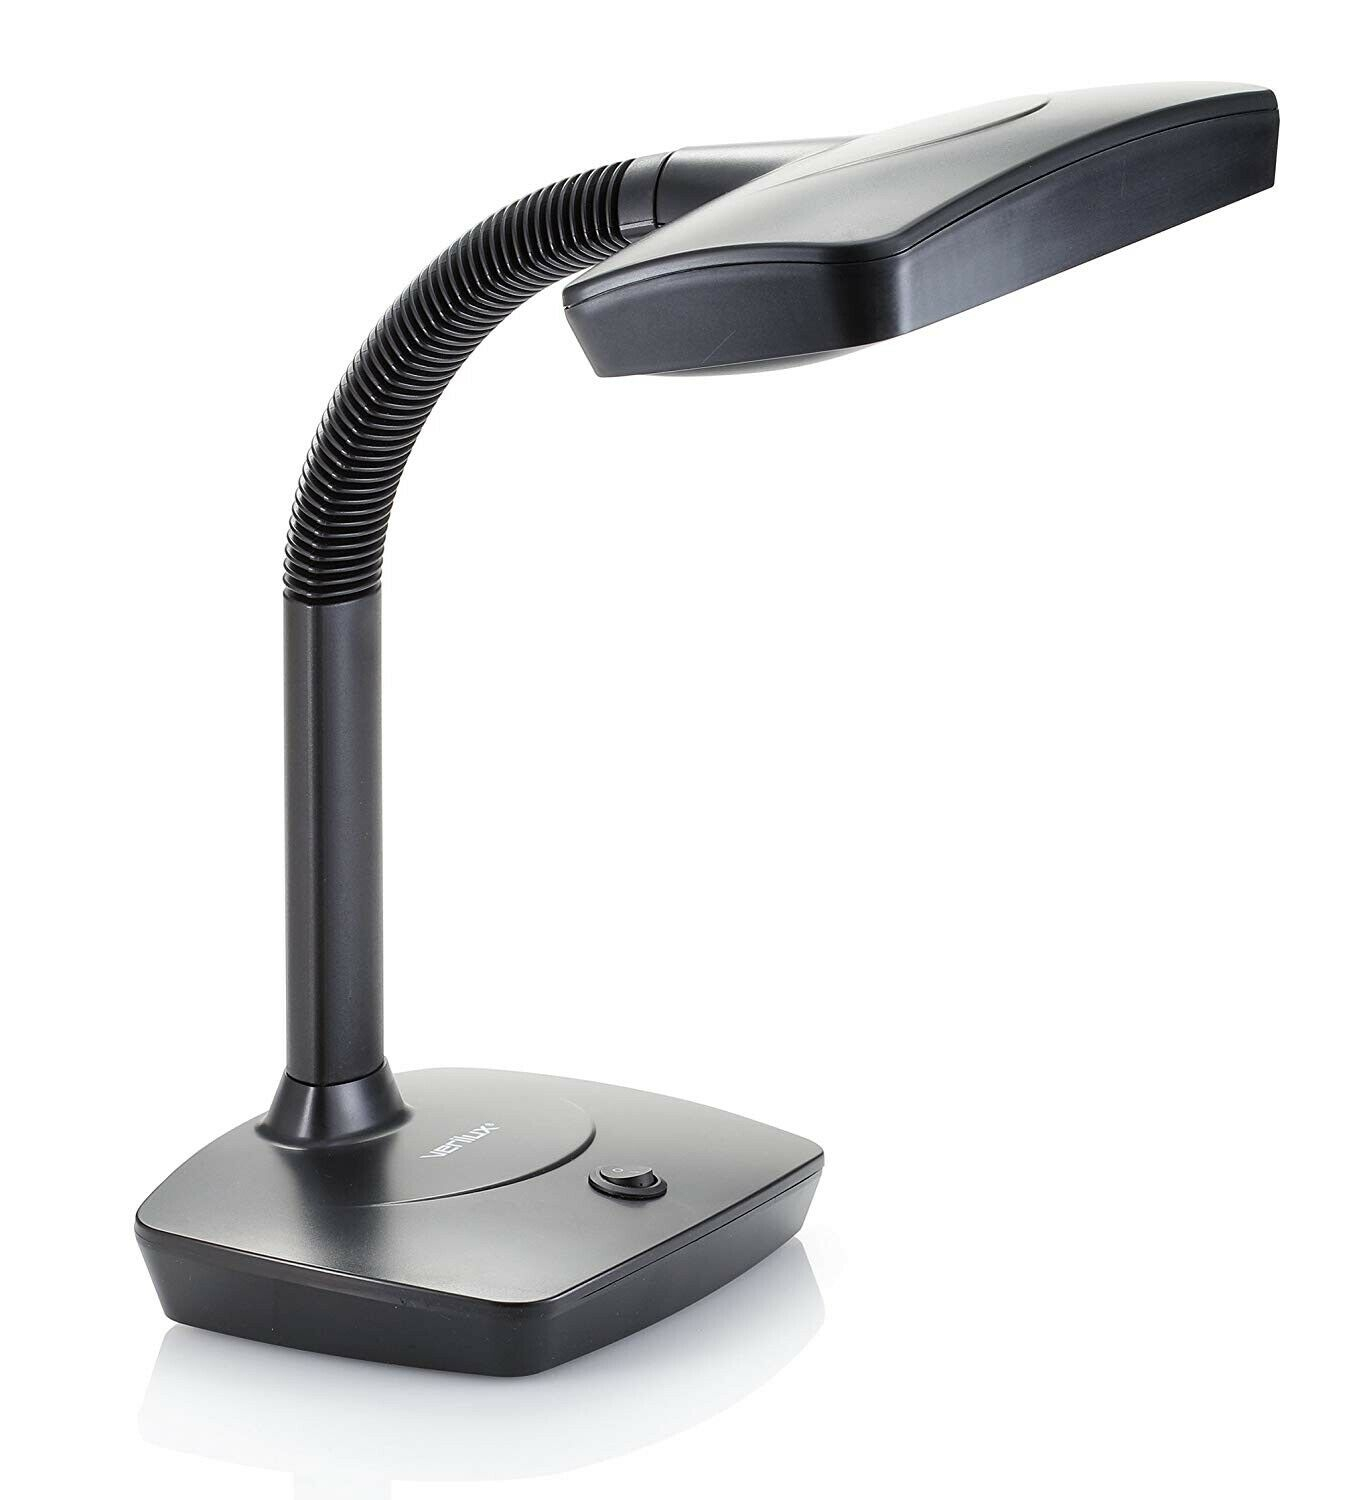 Verilux Happyeyes Vd12bb1 Smart Light Desk Lamp 27w Graphite inside size 1361 X 1500